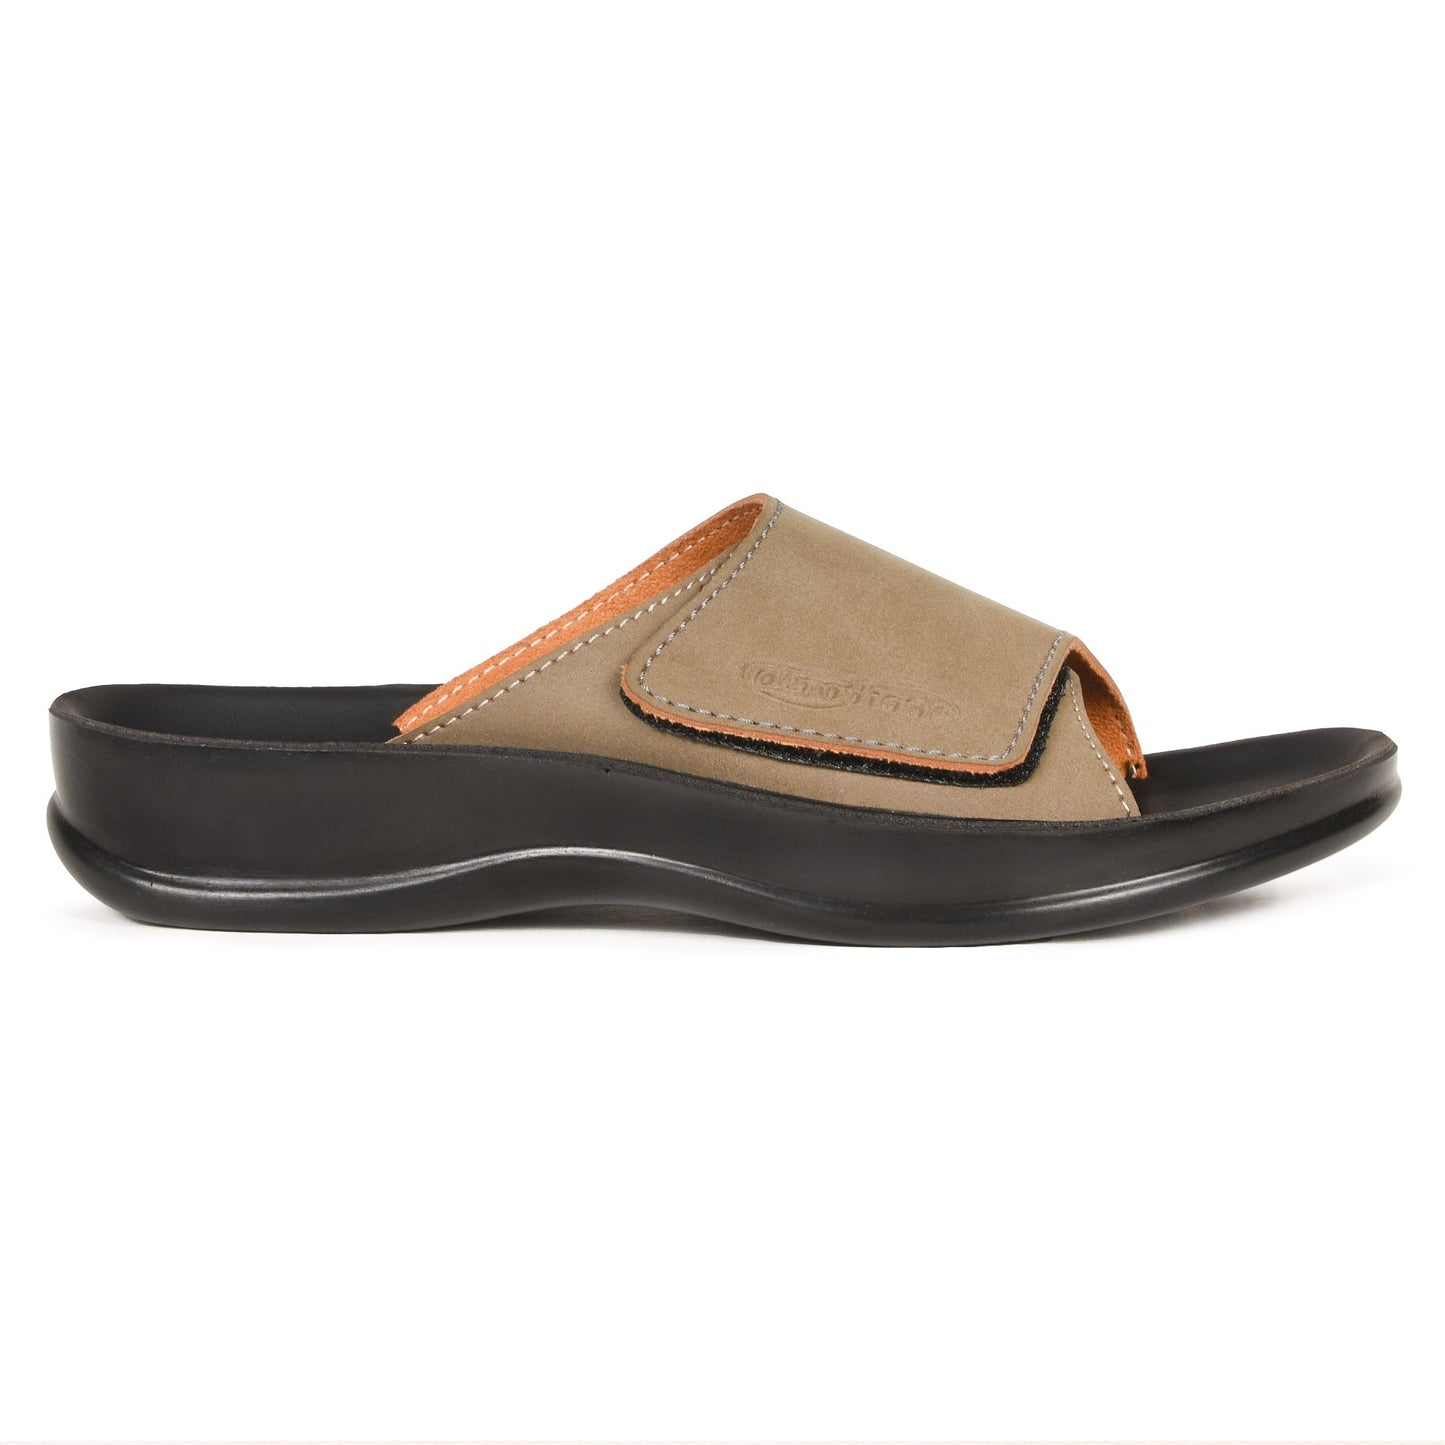 AEROTHOTIC Doris Open Toe Arch Support Women’s Slide Sandals - Original Thailand Imported - L1508